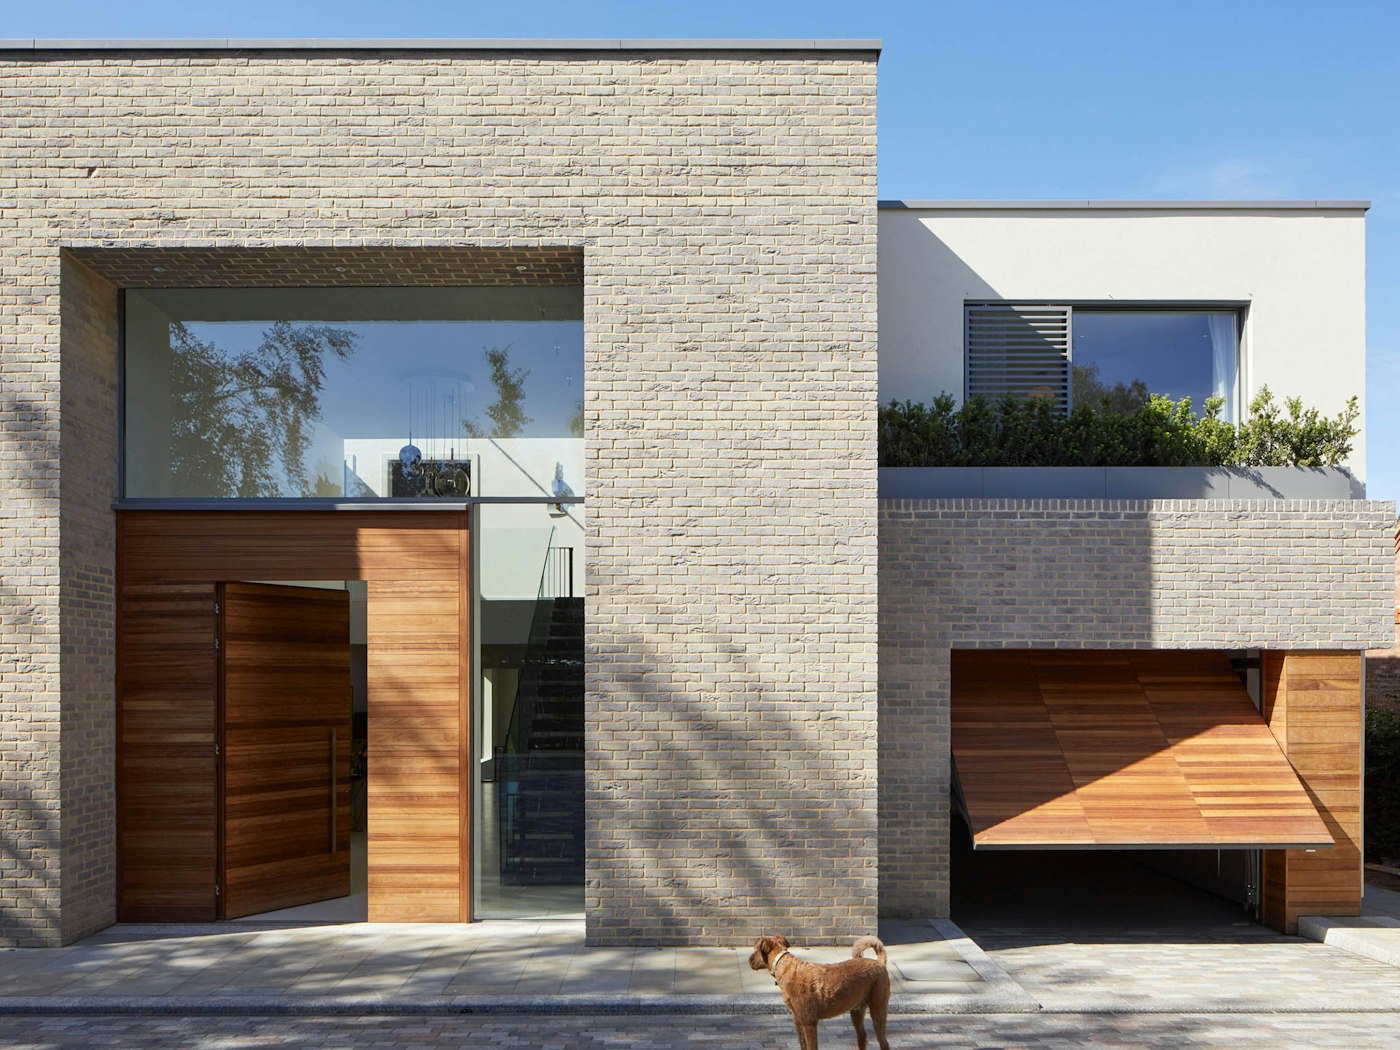 Contemporary new build with matching door and garage in iroko